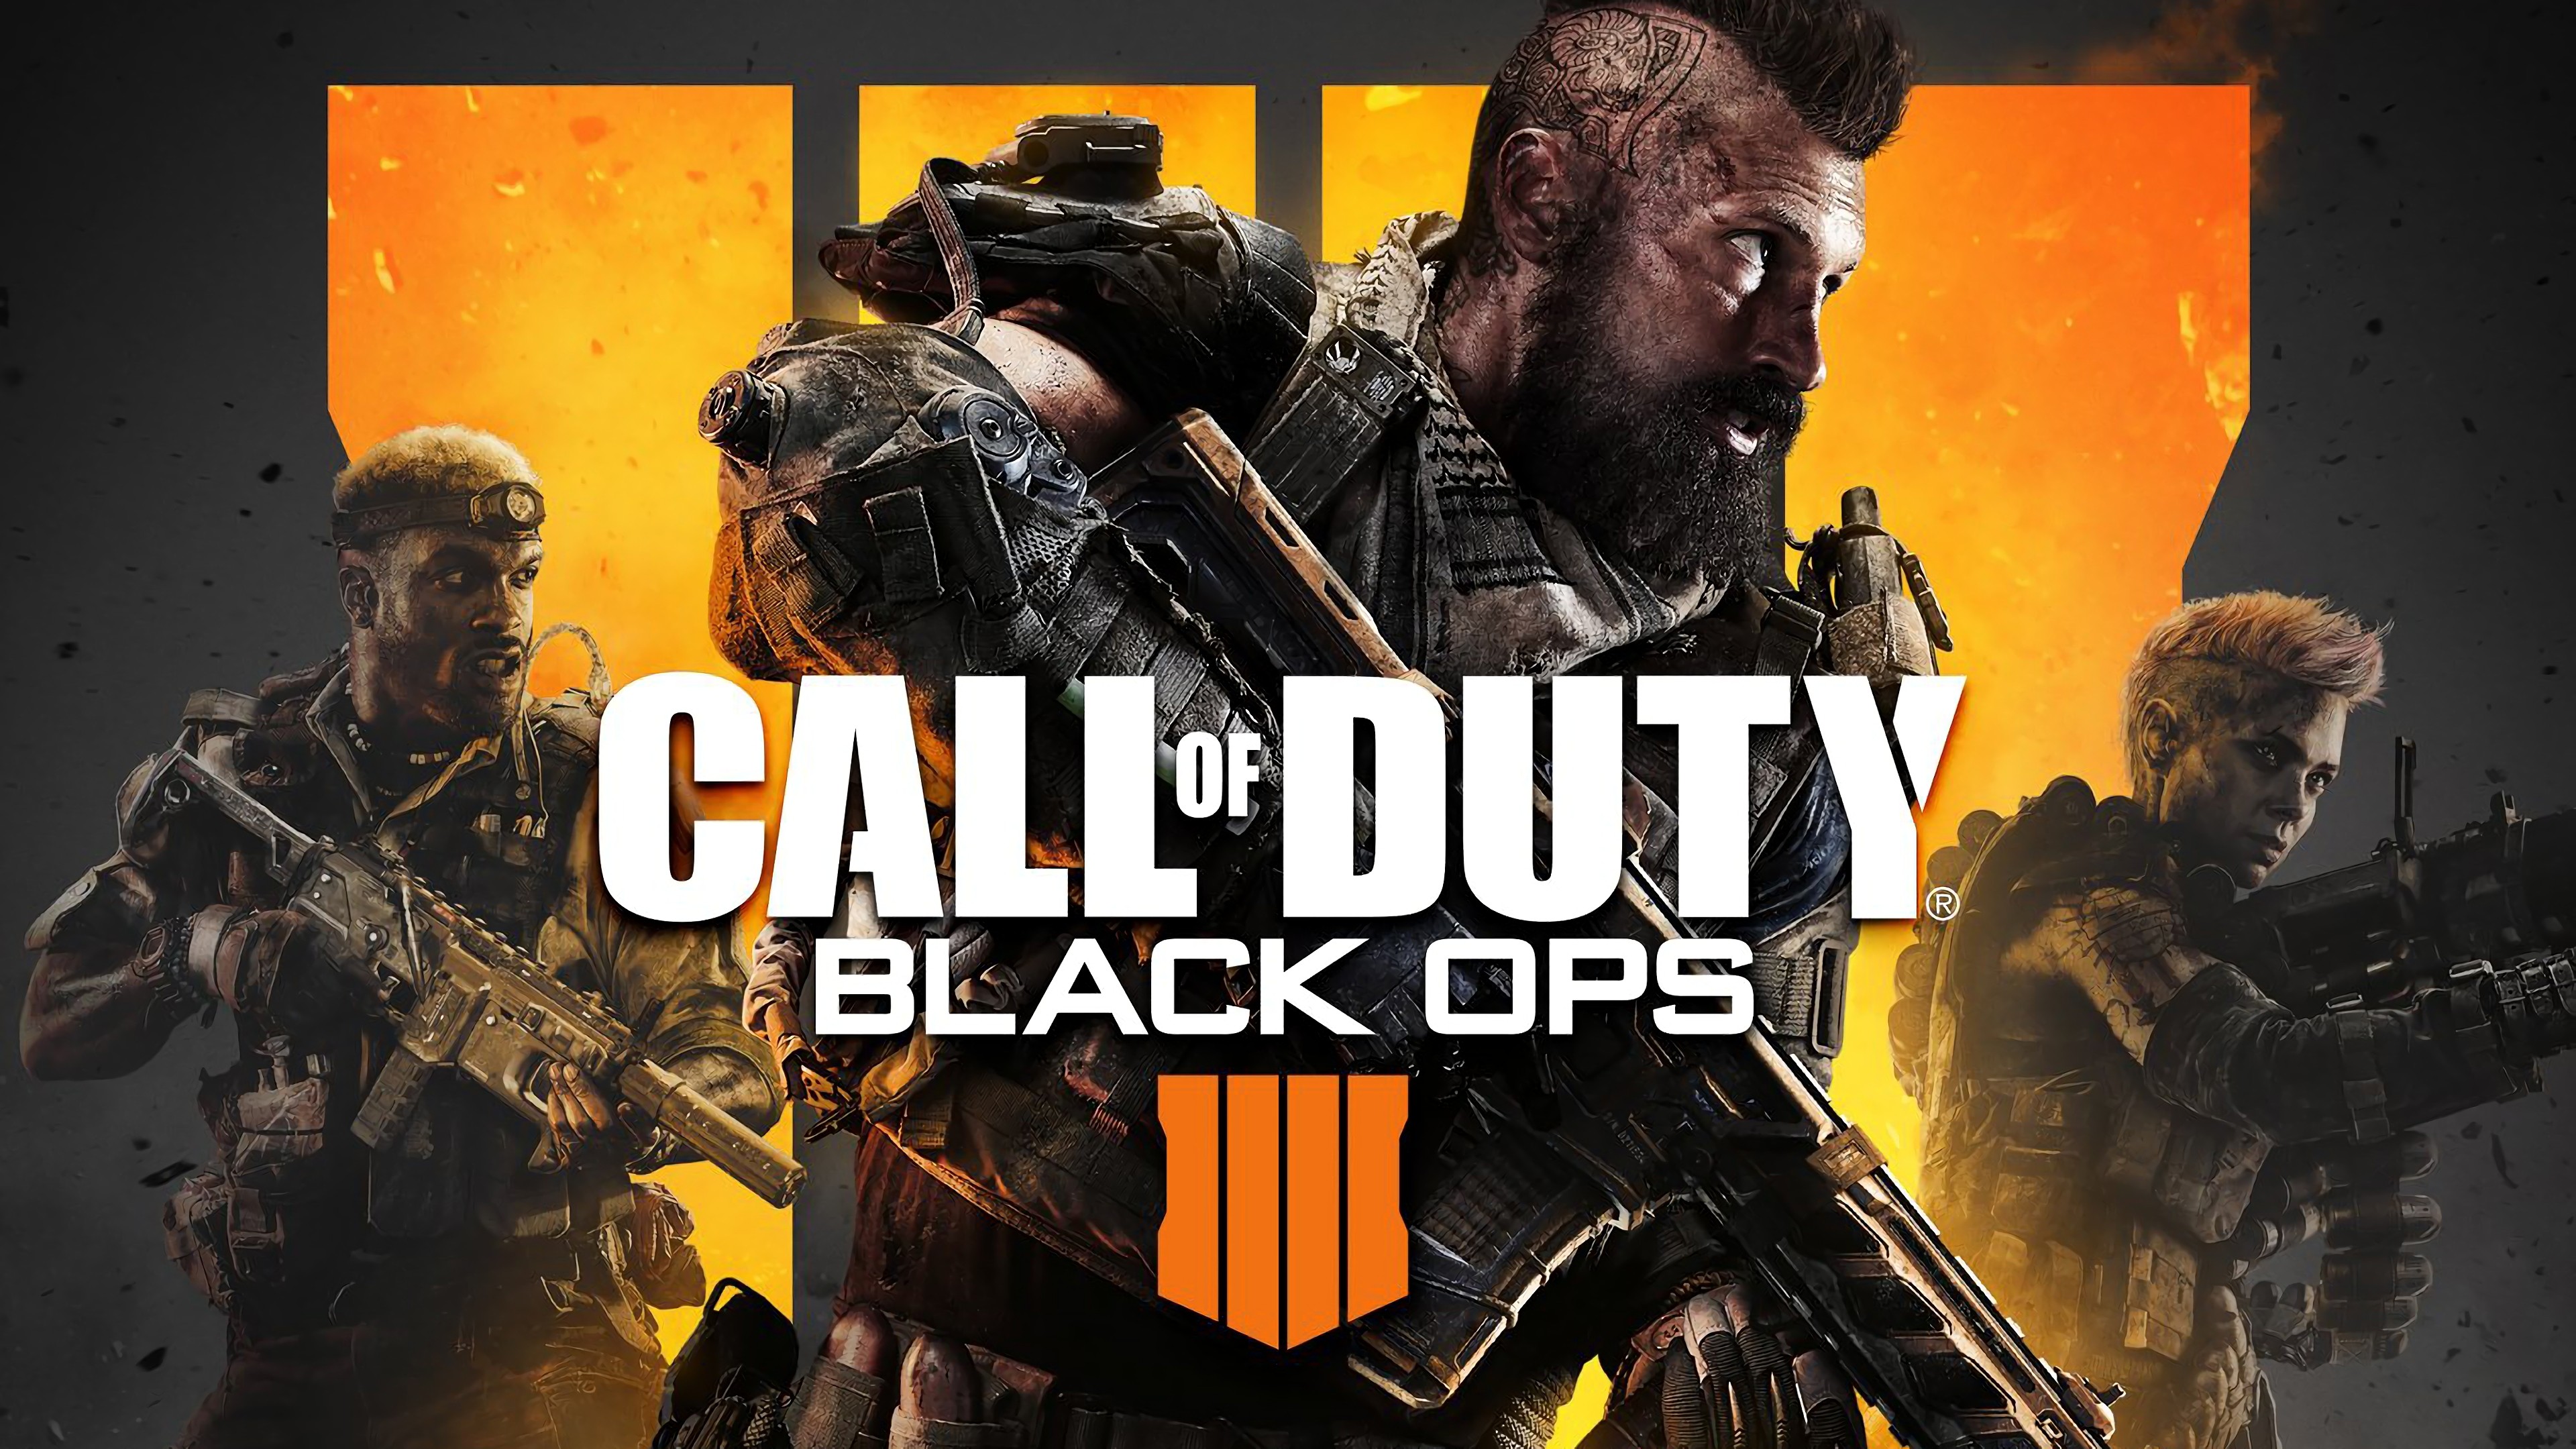 Call of Duty Black Ops 4 Poster Wallpaper 4k Ultra HD ID:2975